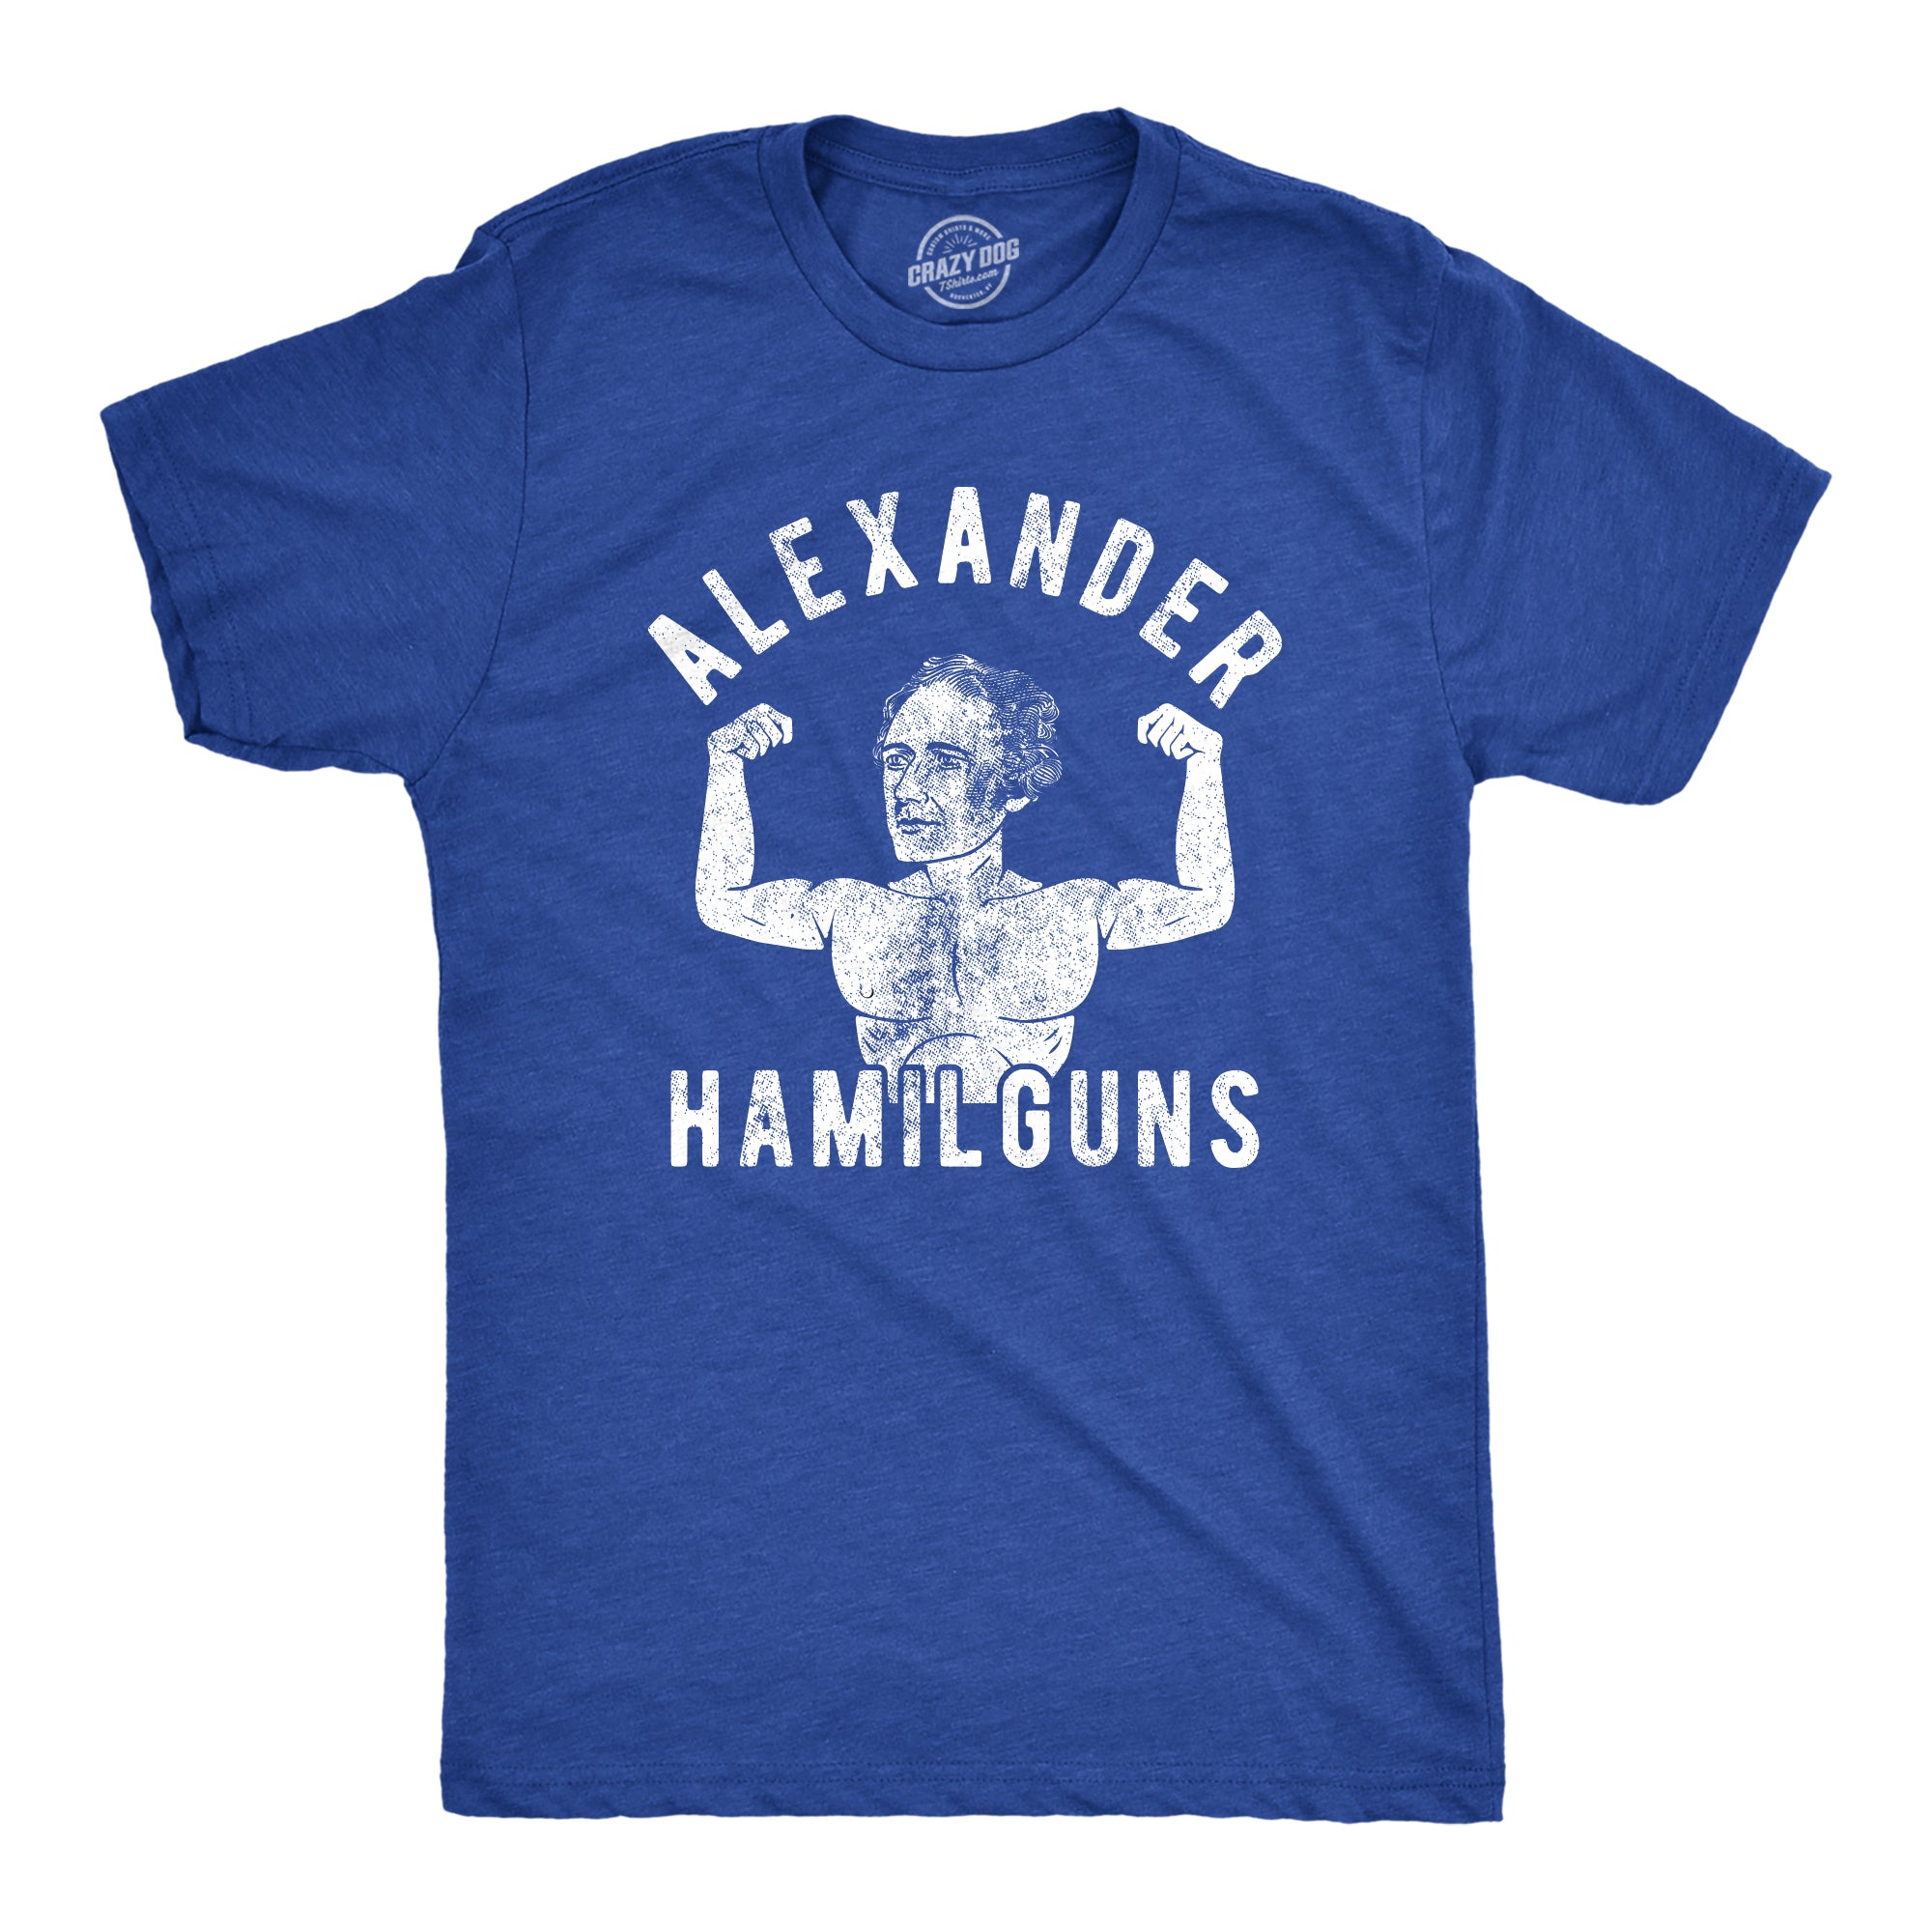 Funny Heather Royal Alexander Hamilguns Mens T Shirt Nerdy Fourth Of July Sarcastic Tee